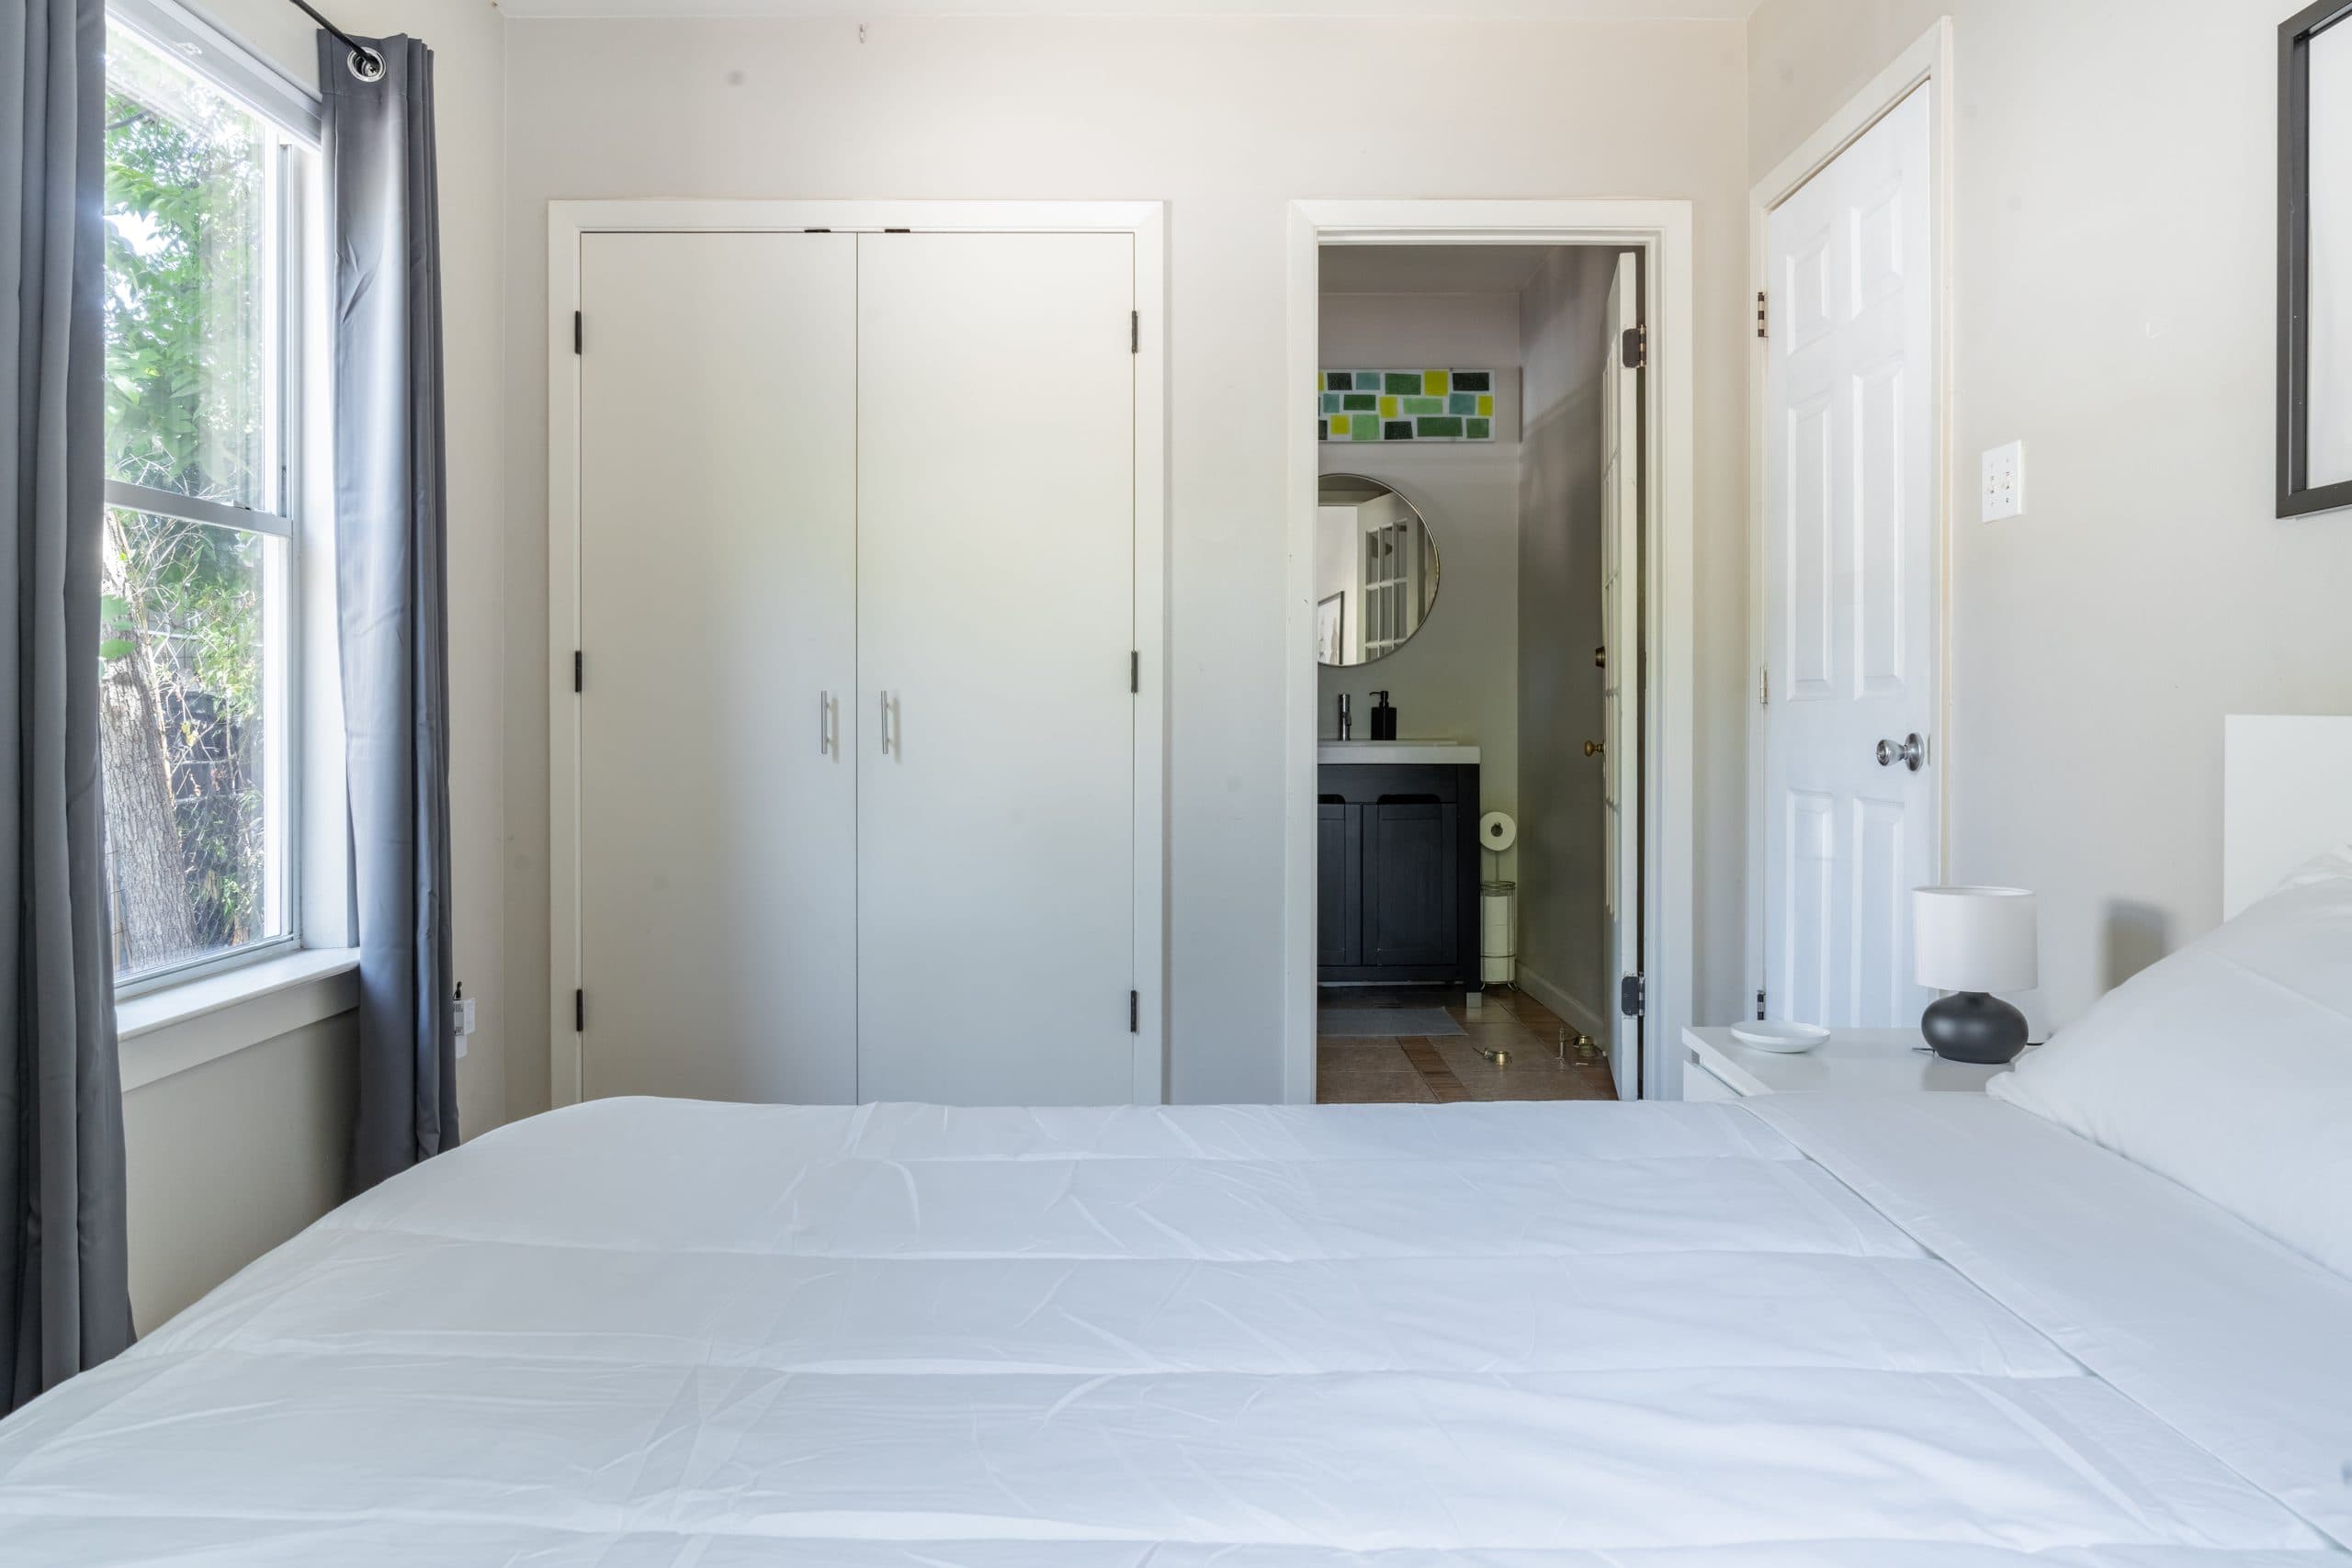 Photo 13 of #4064: Full Bedroom B at June Homes